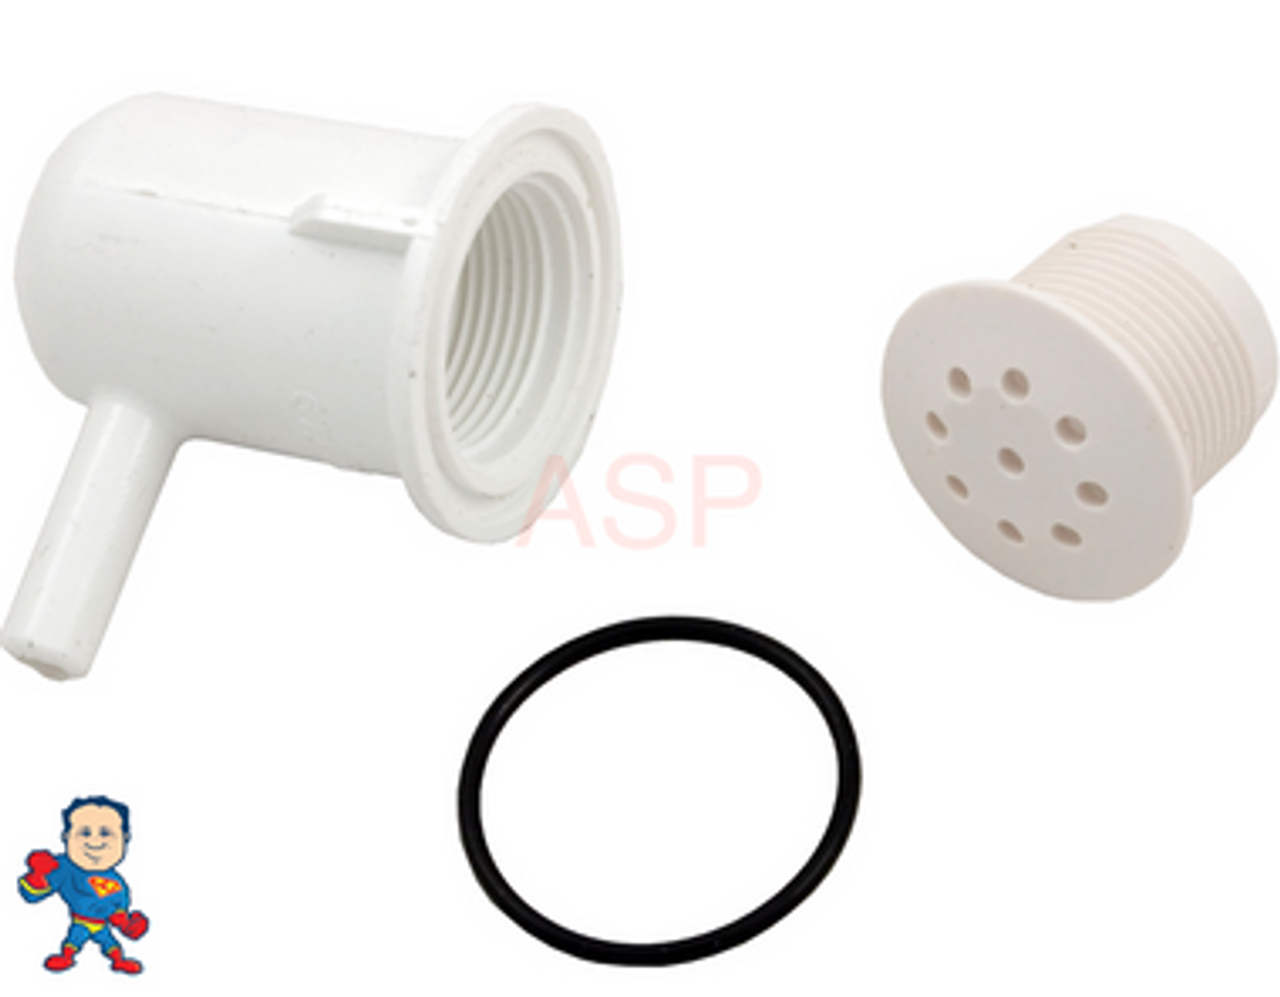 Air Injector, Top Flo, 3/8"b, 90° ELL Body, White, Salt & Pepper Style